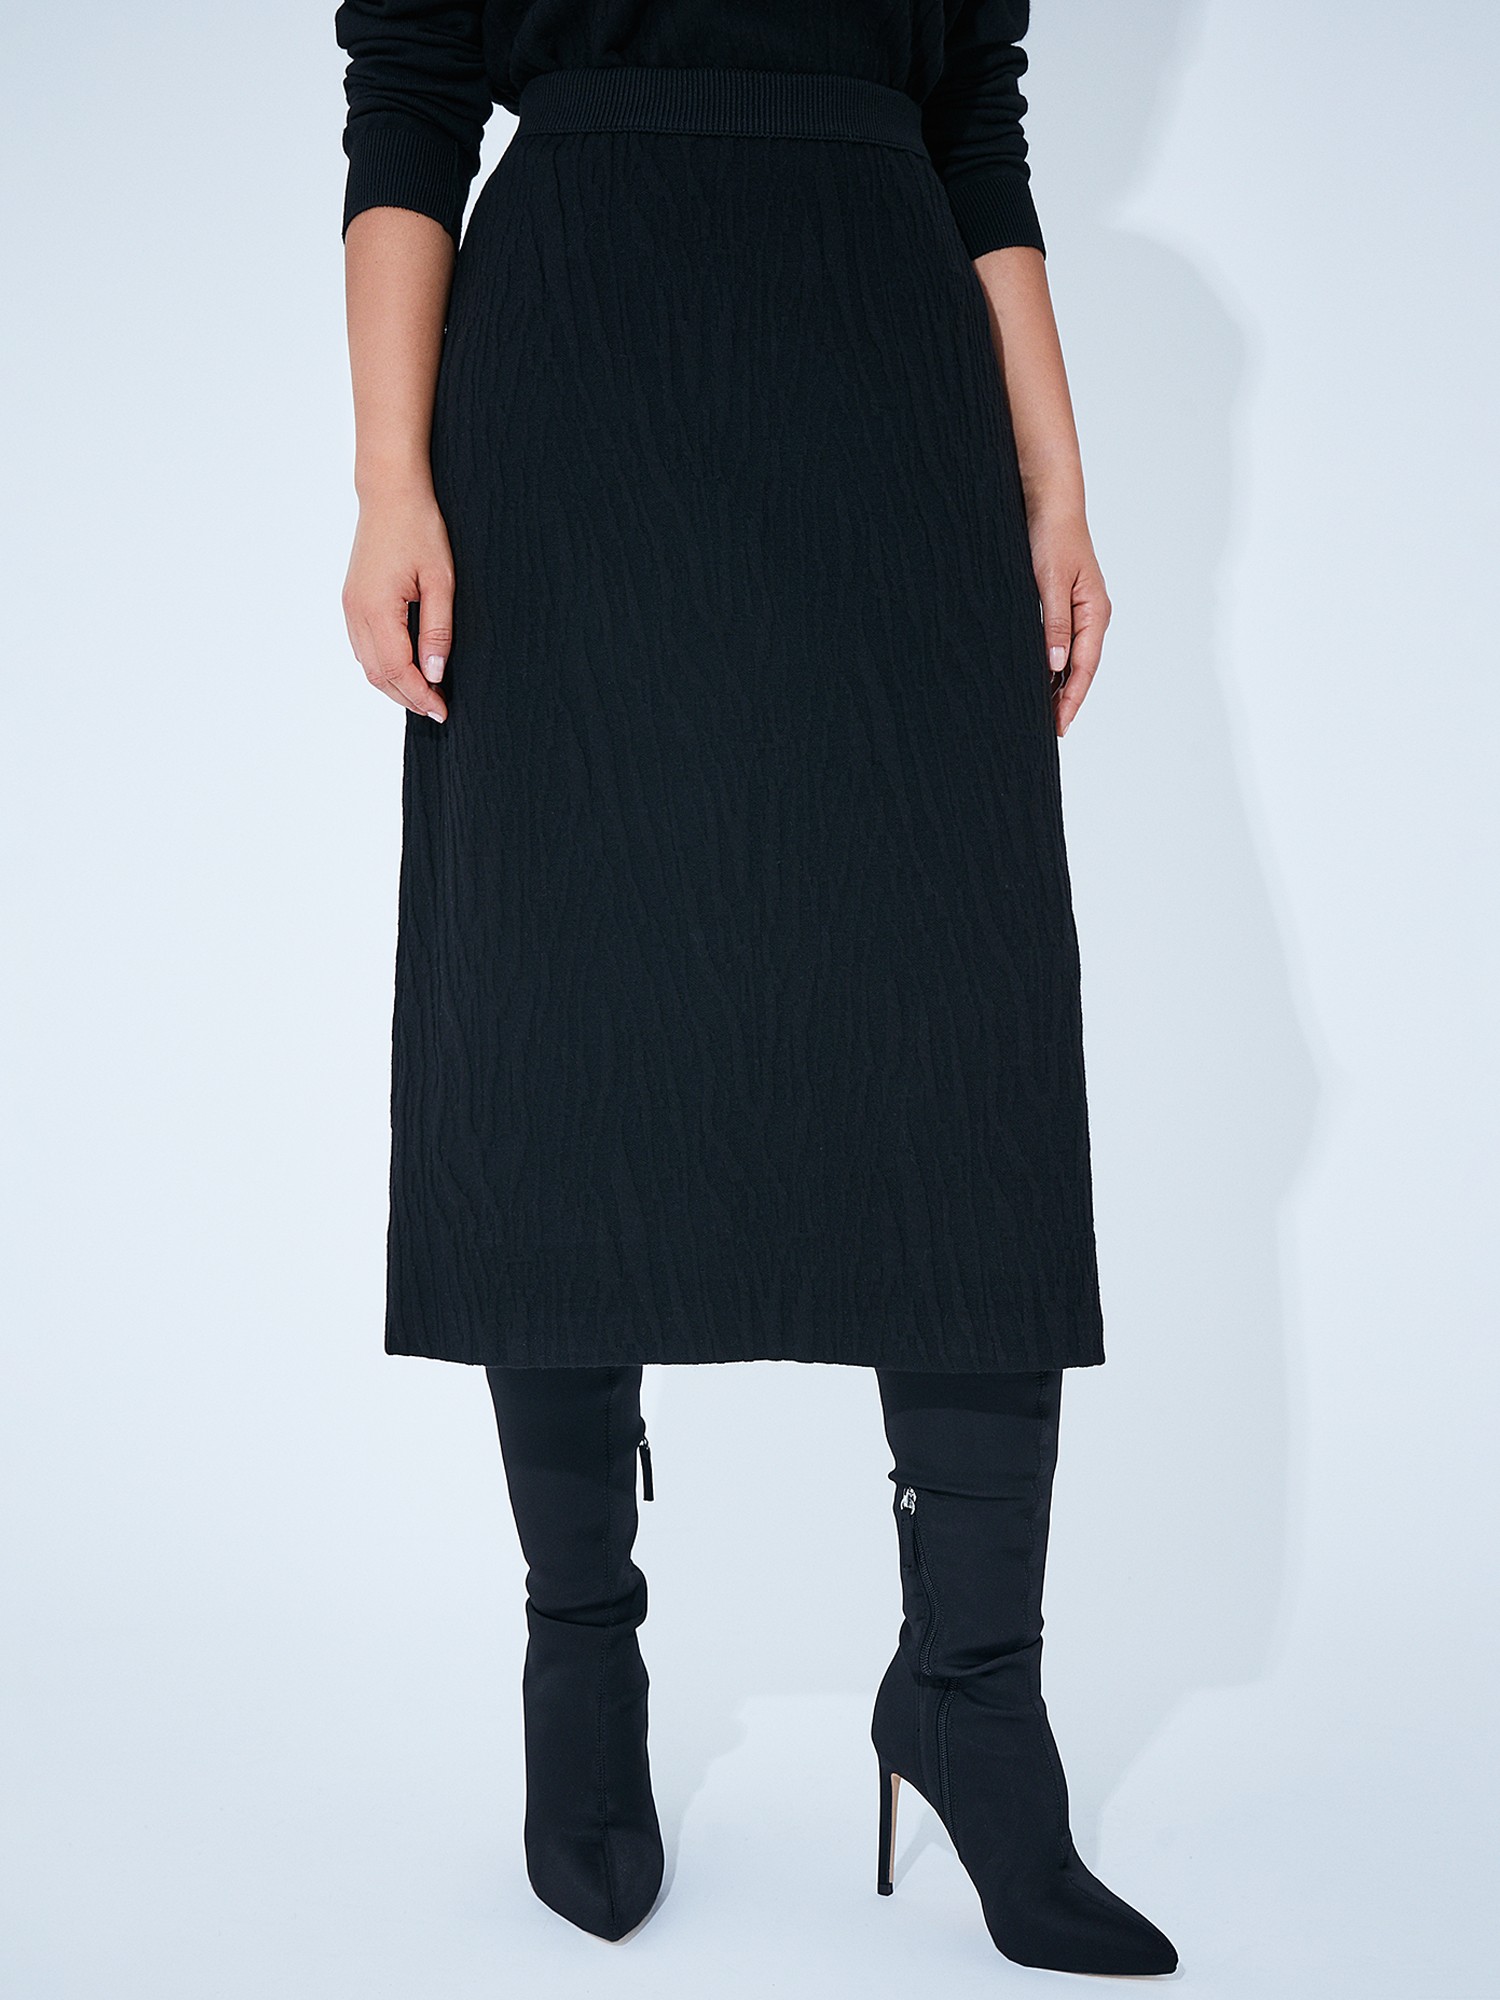 Чёрная трикотажная юбка Lalis SK0139K - фото 3